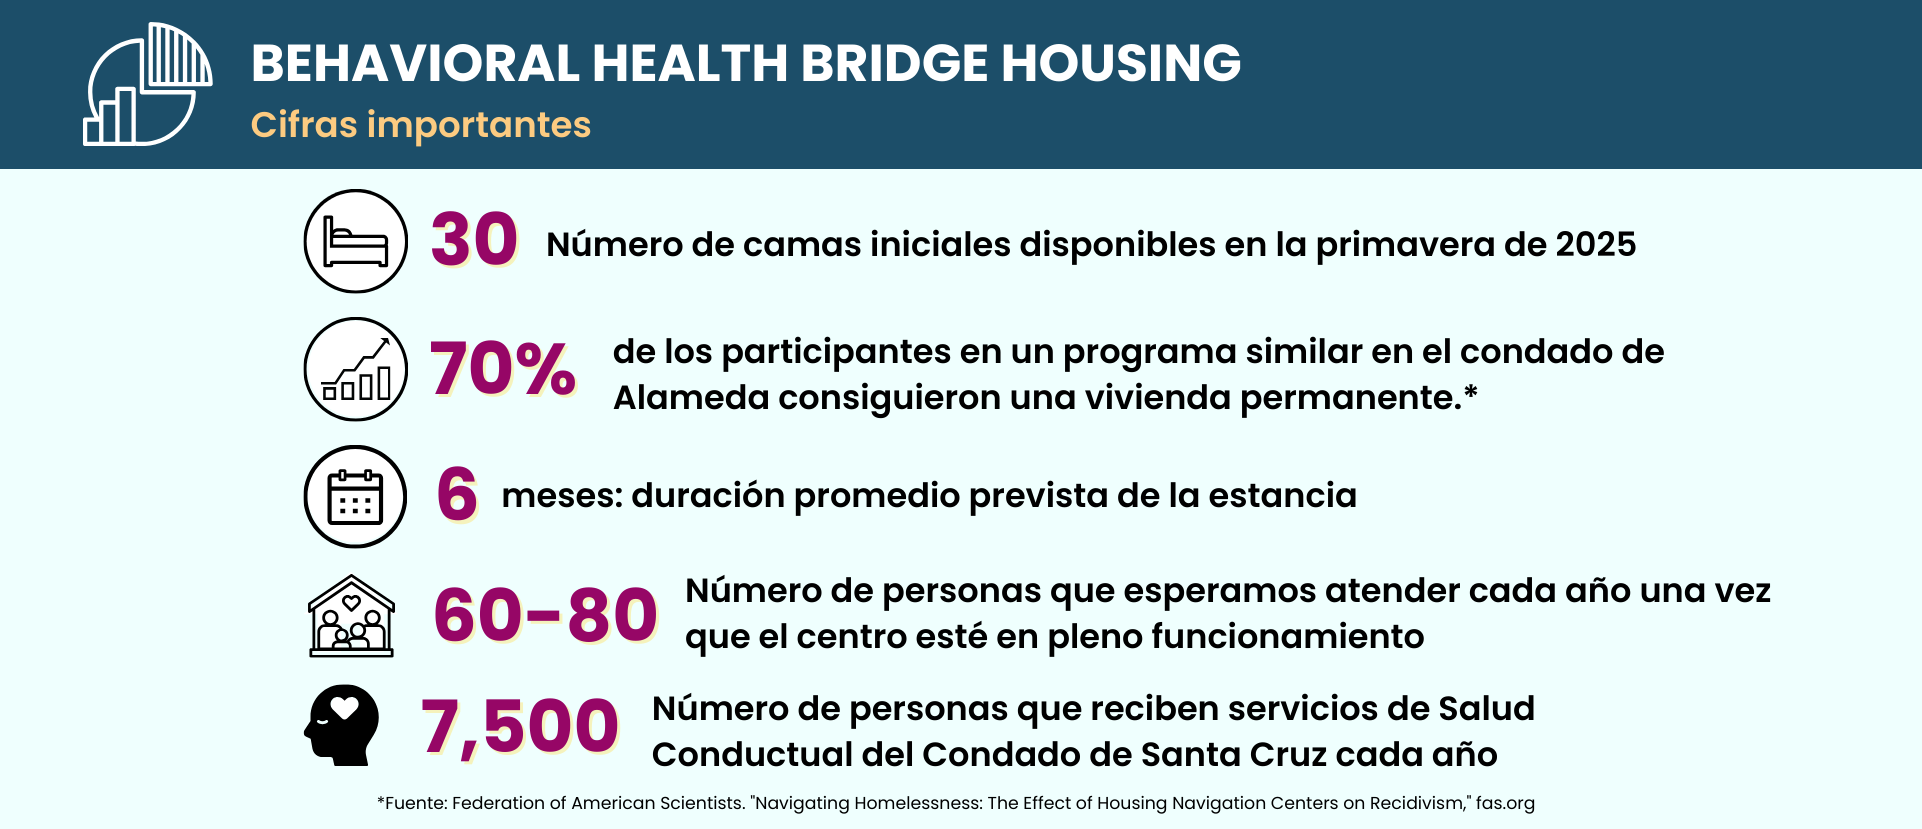 Behavioral Health Bridge Housing  By the numbers